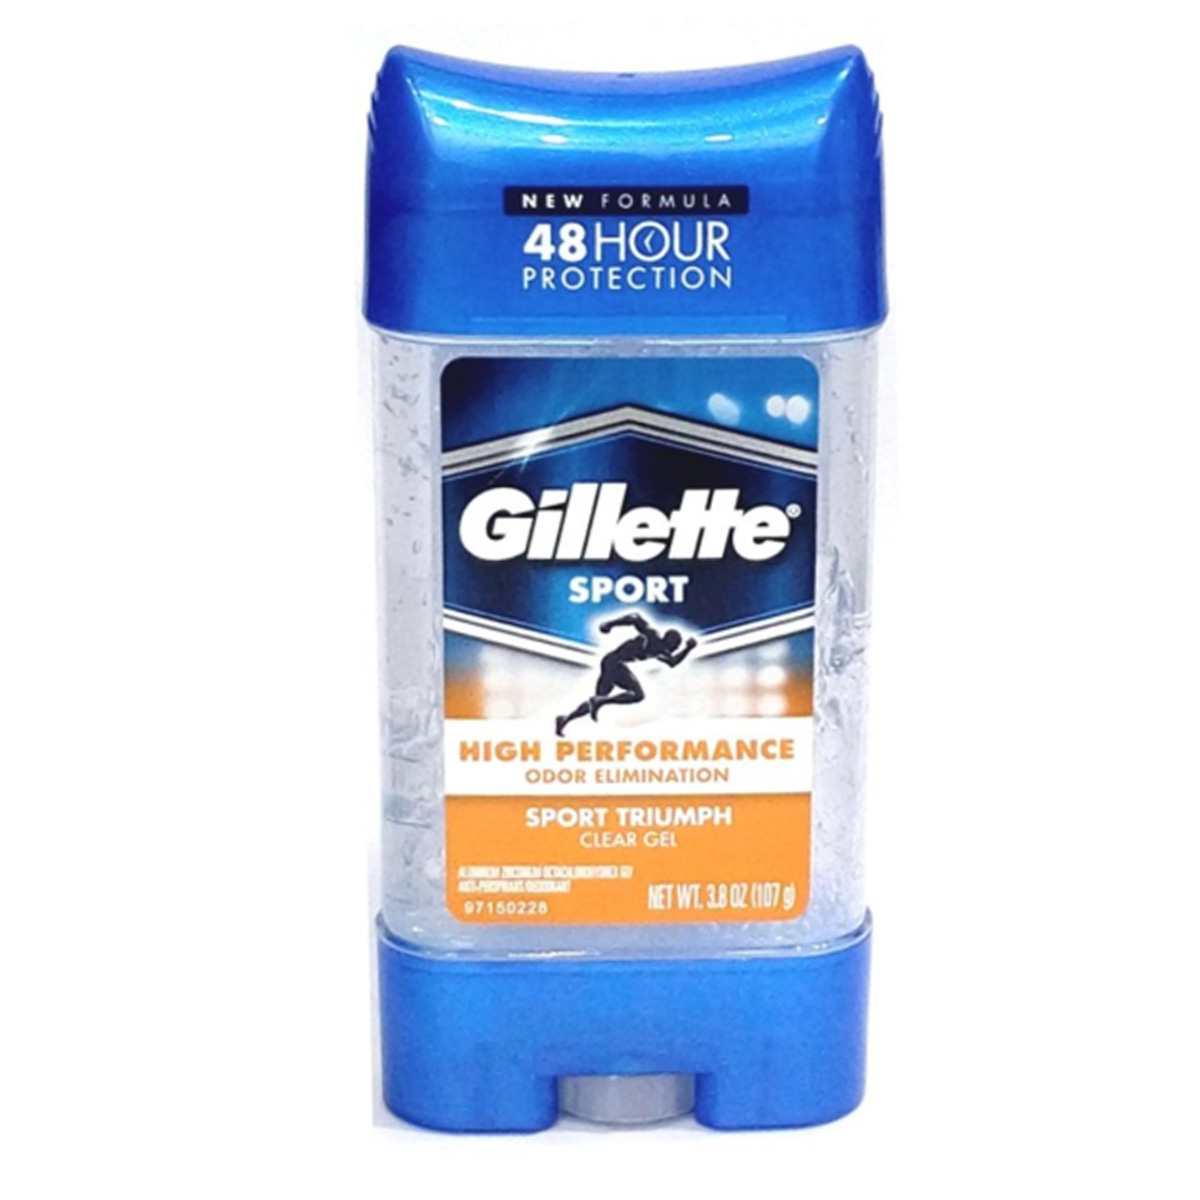 Gillette High Performance Odor Elimination Sport Triumph Deodorant Stick, 107gm